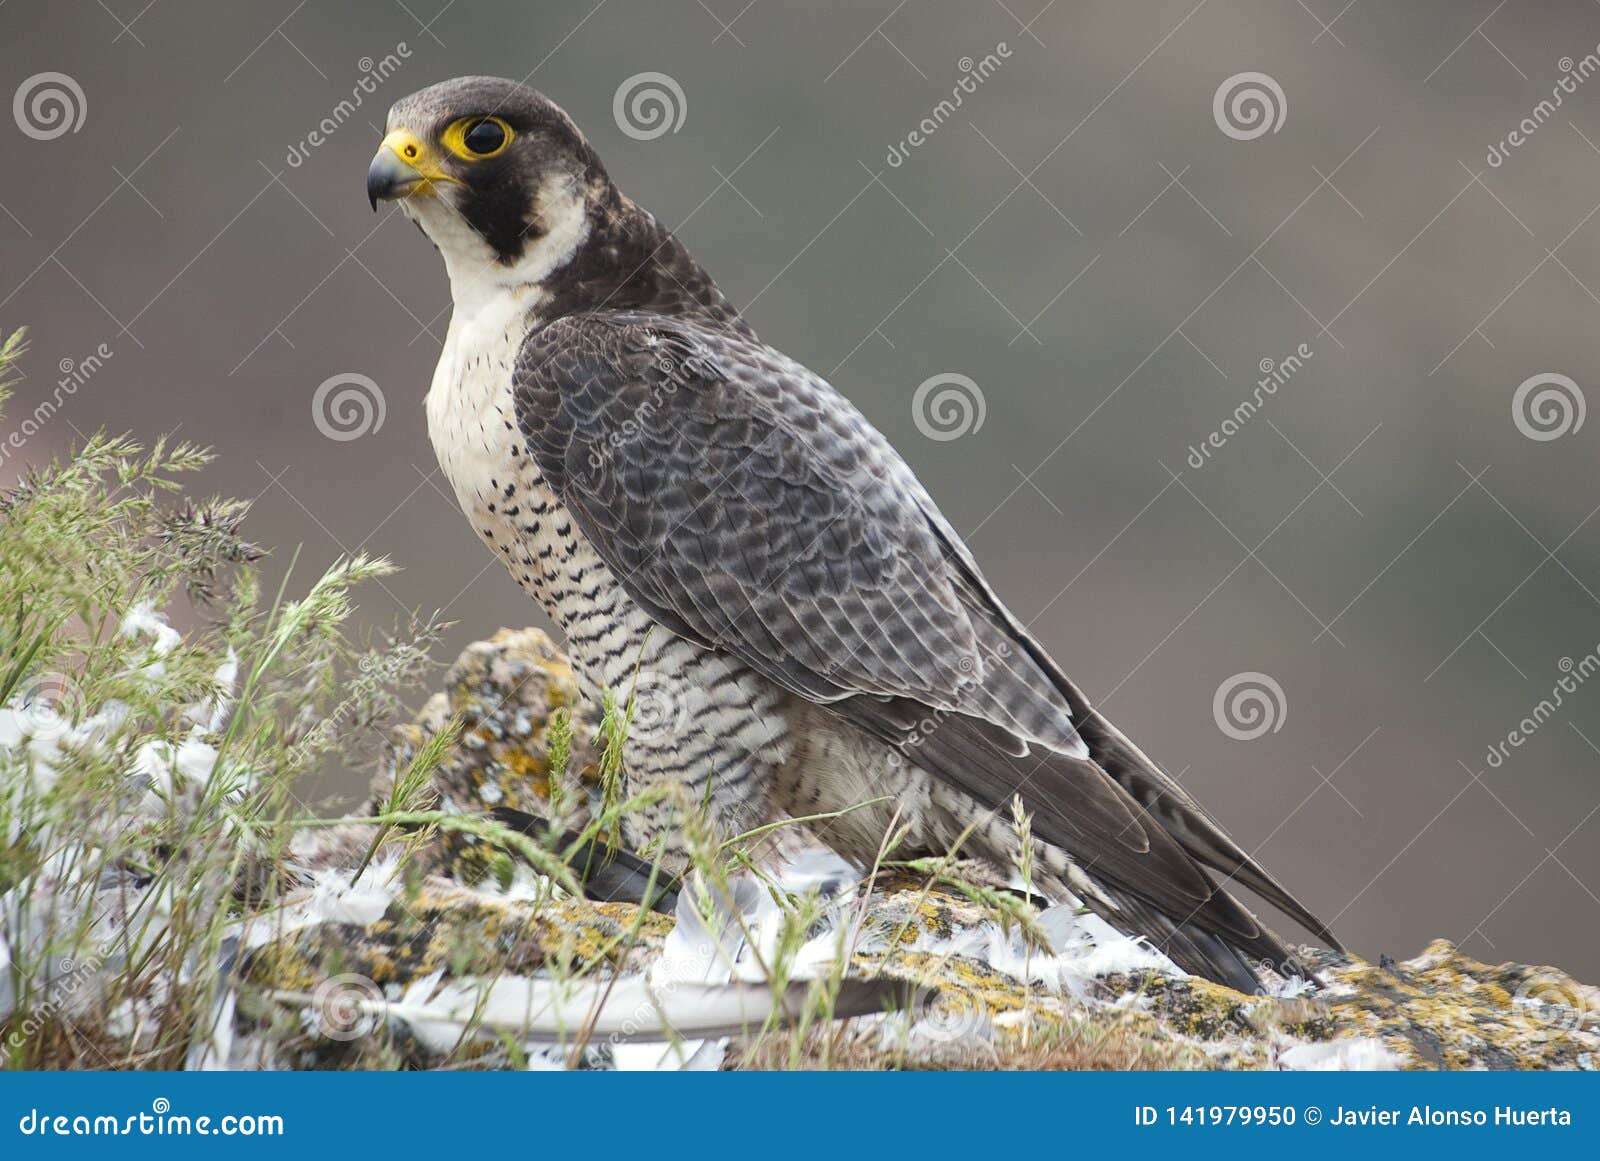 peregrine falcon on the rock. bird of prey, female, falco peregrinus